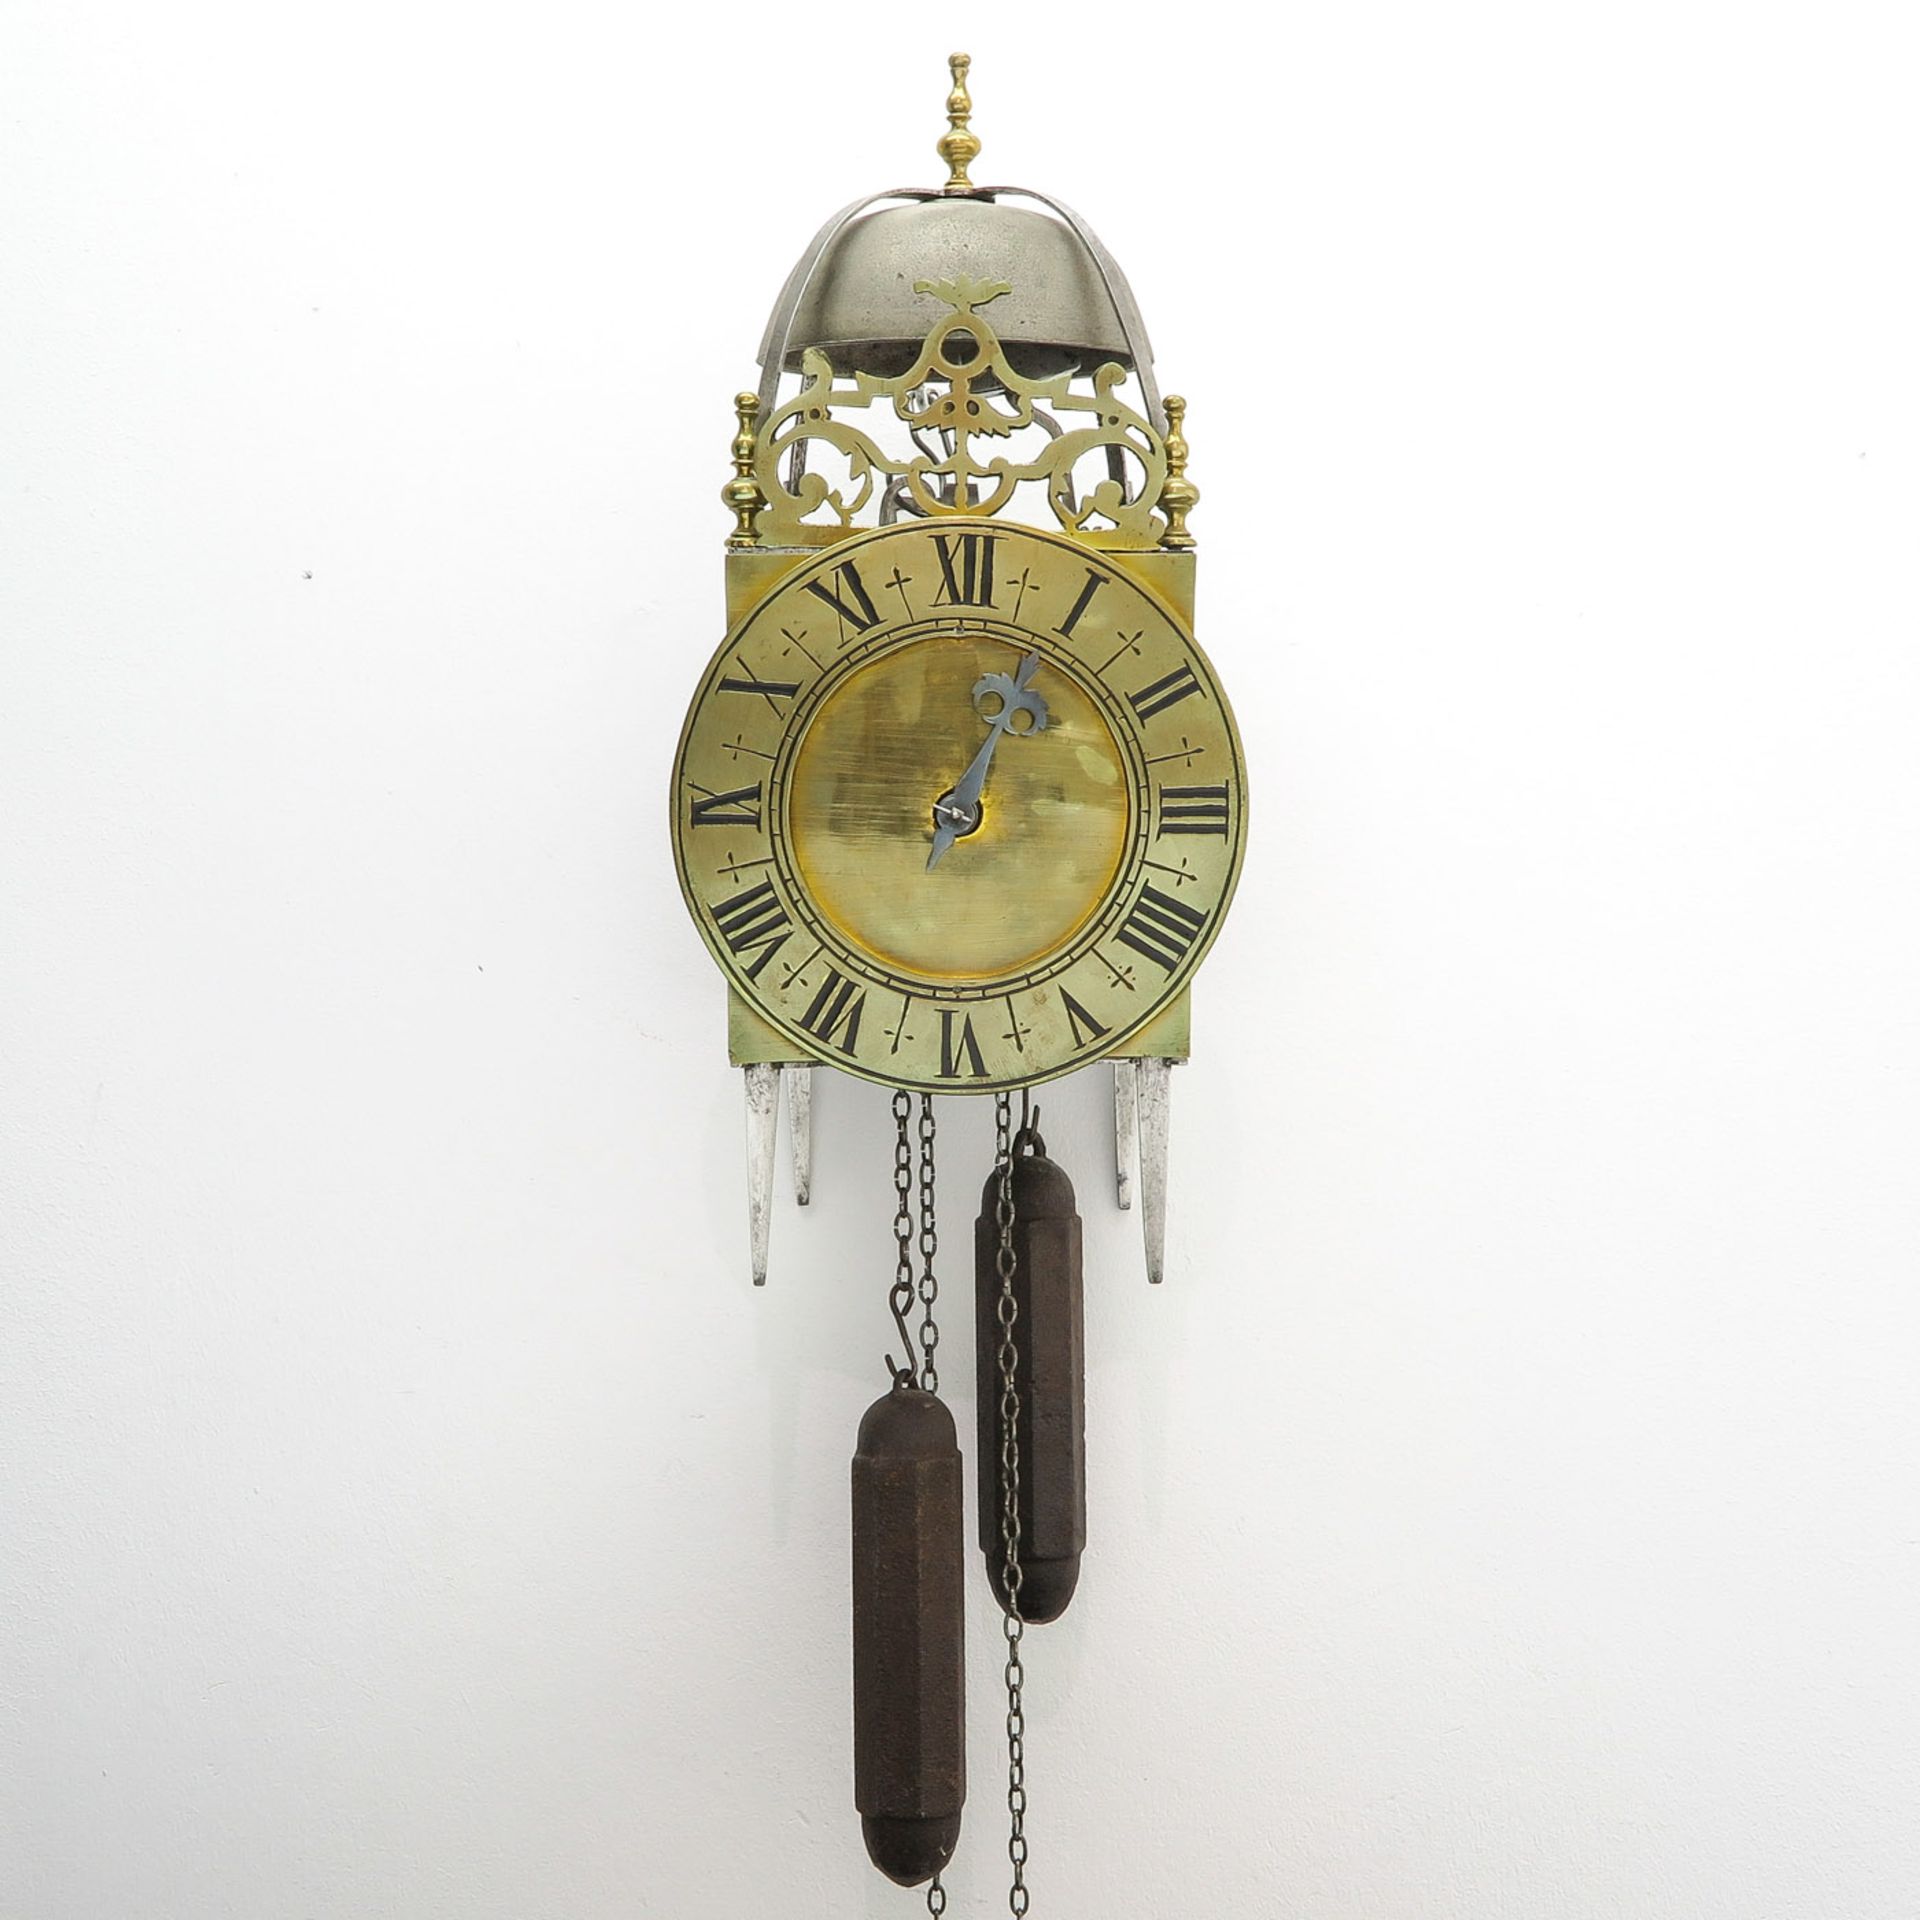 A 17th - 18th Century French Lantern clock